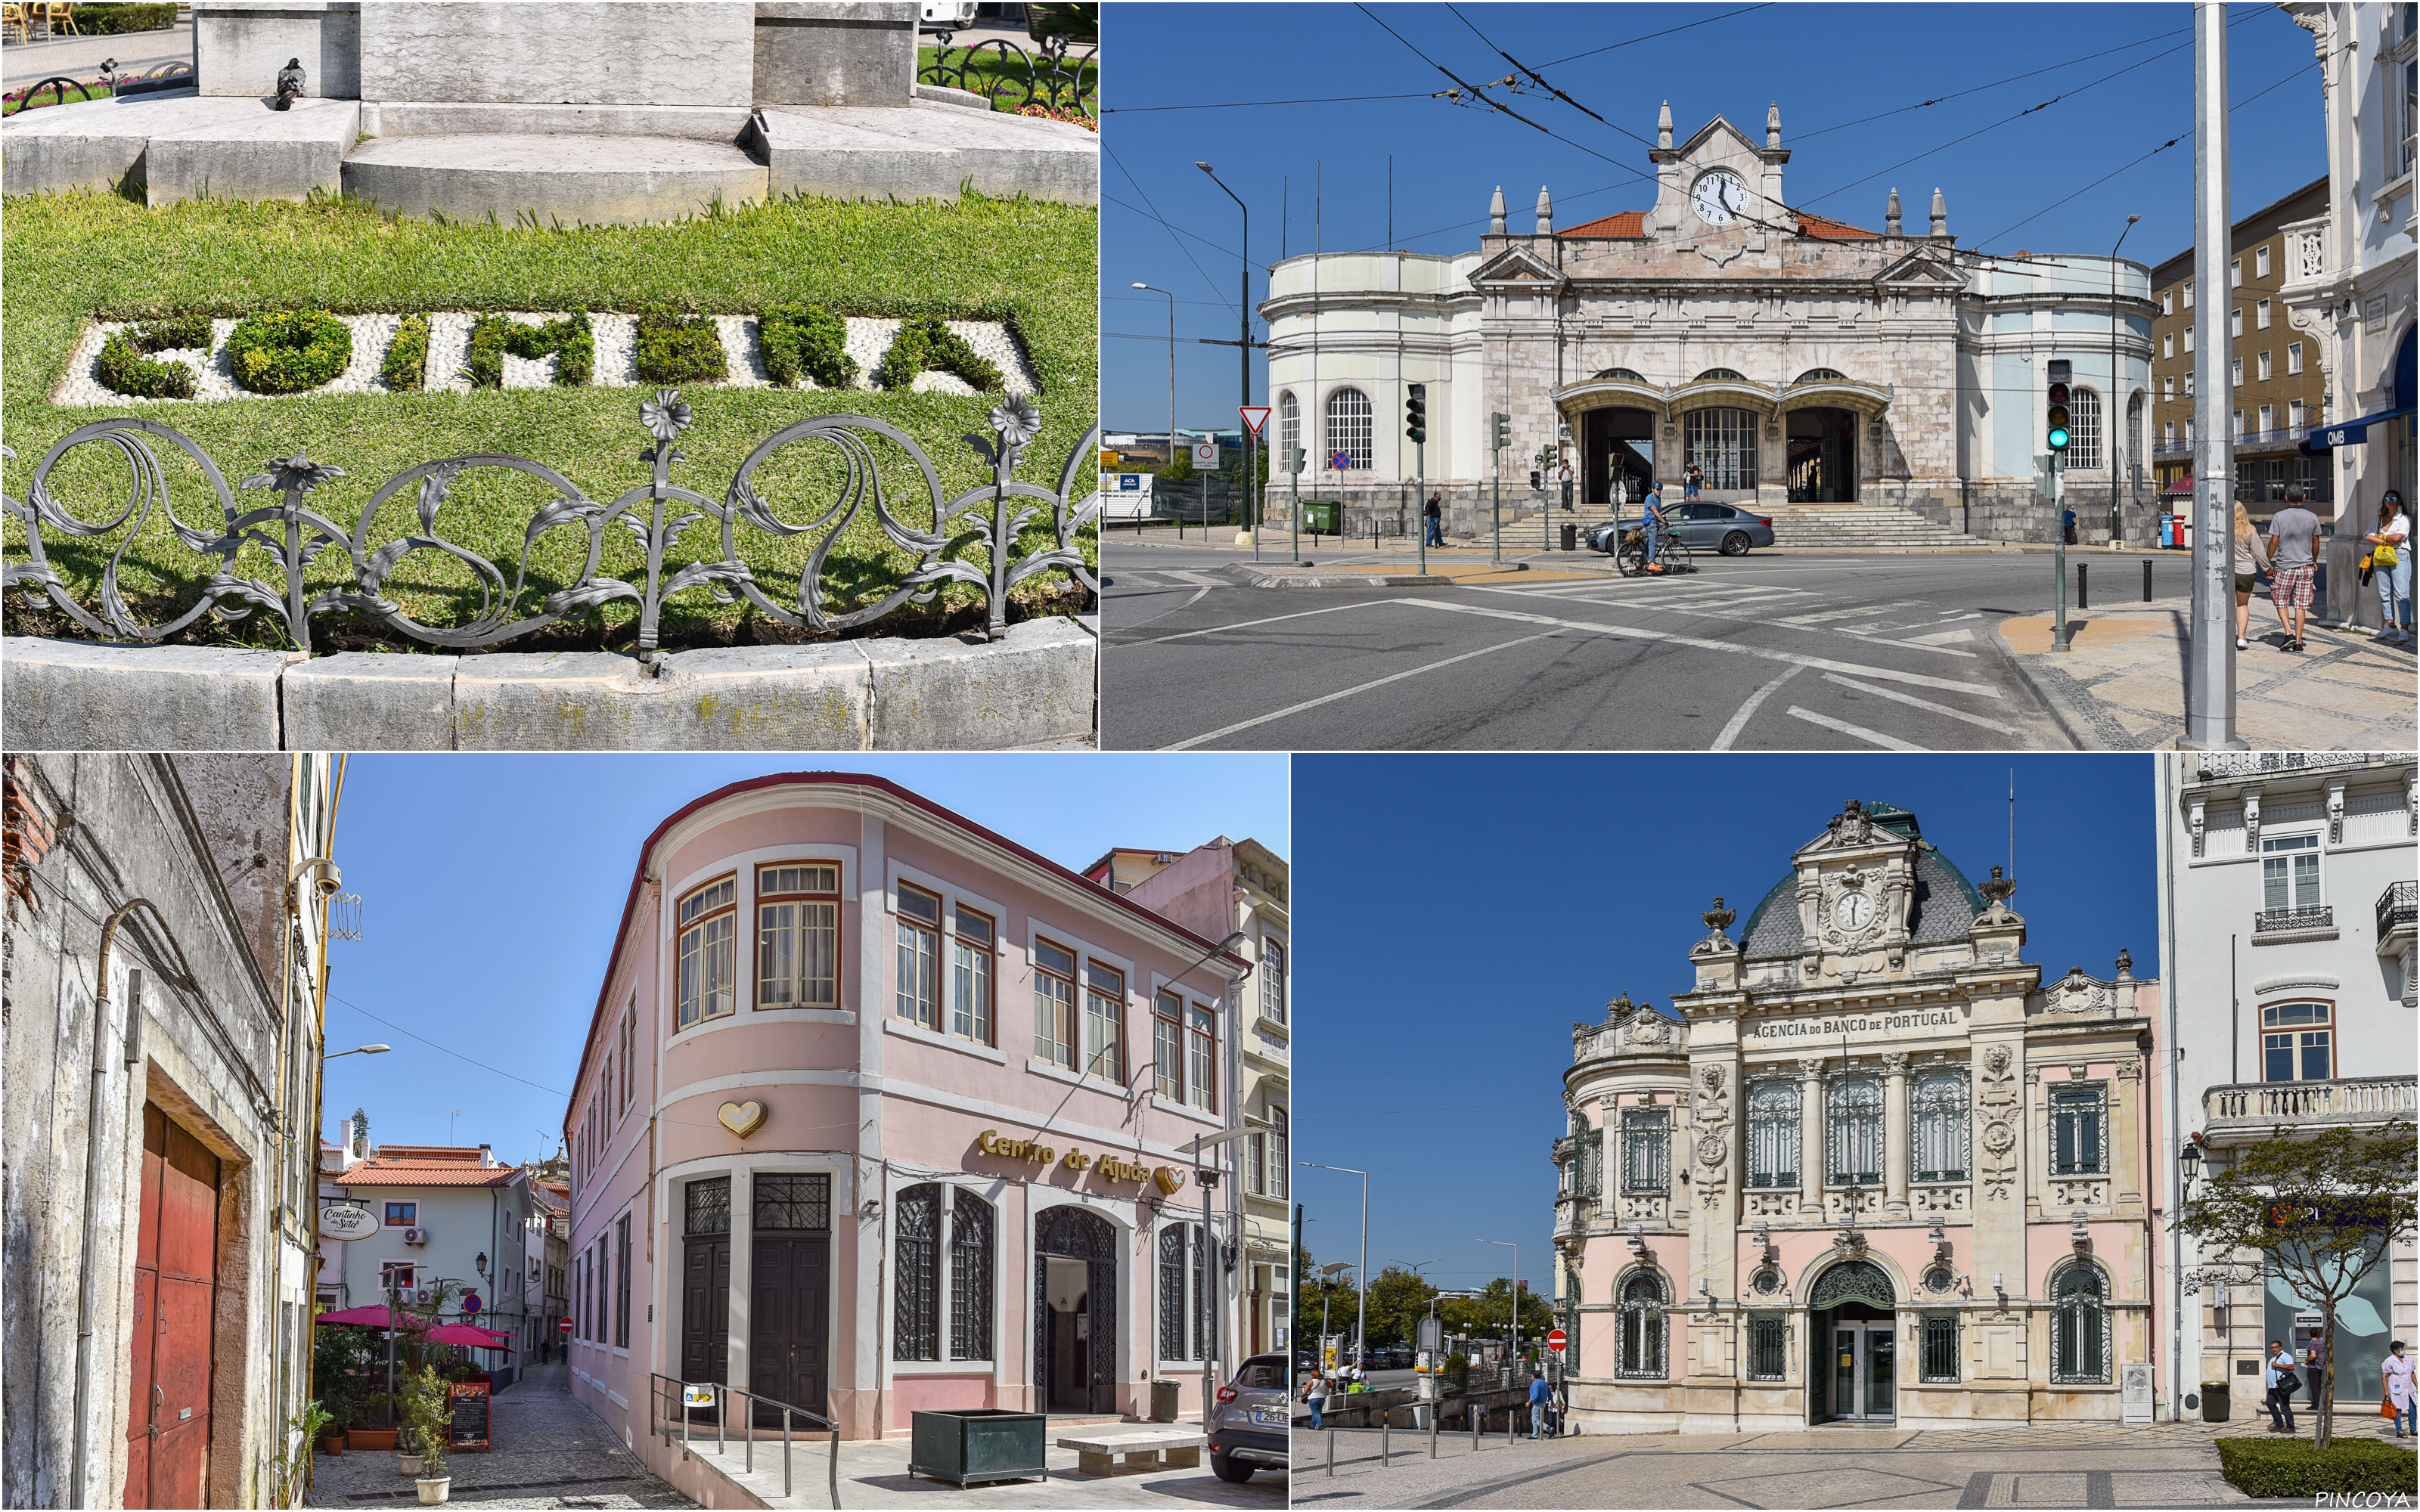 „Angekommen in Coimbra“